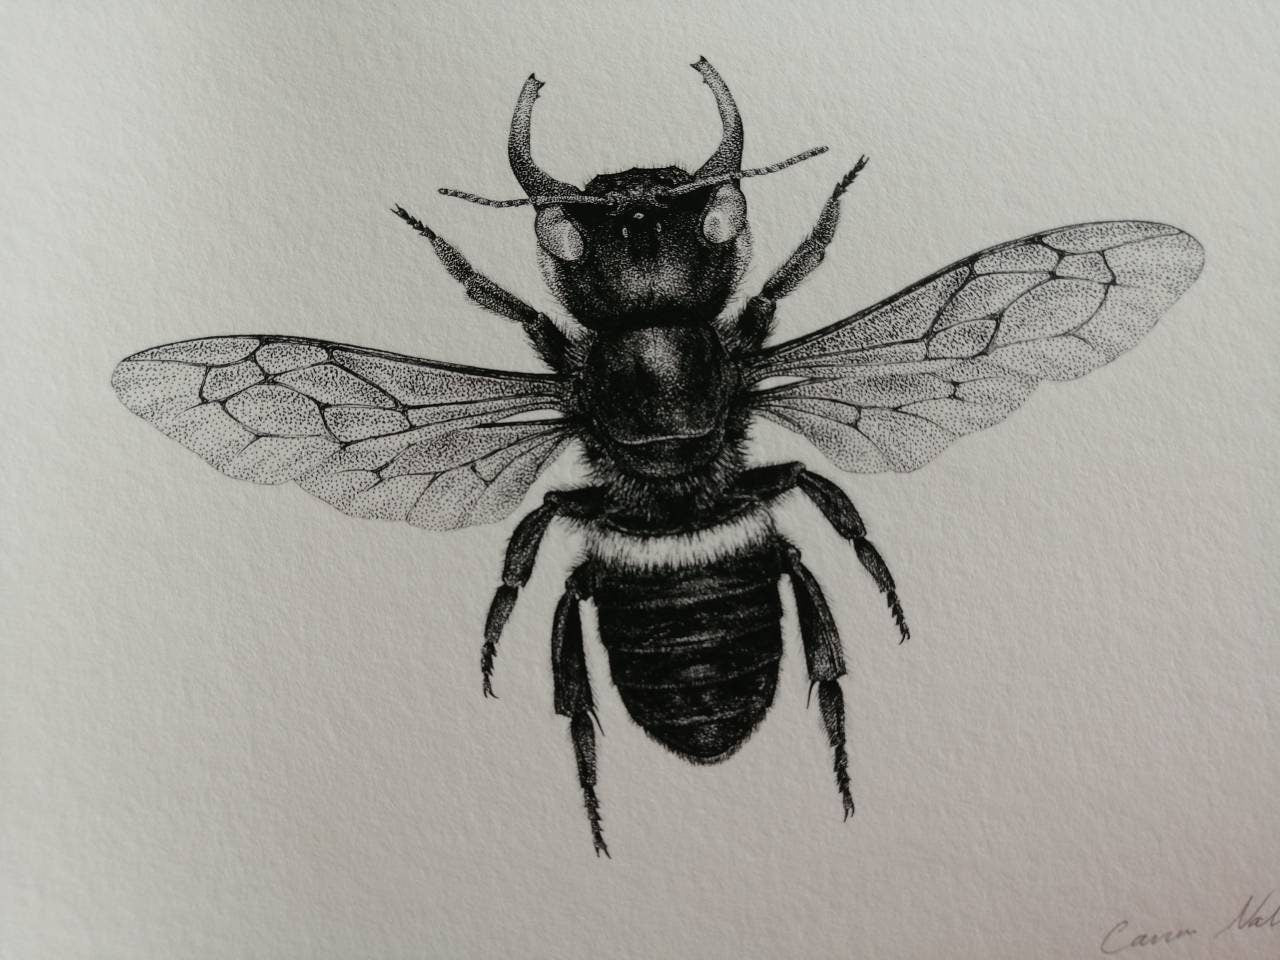 Megachile pluto archival quality art print A4 size